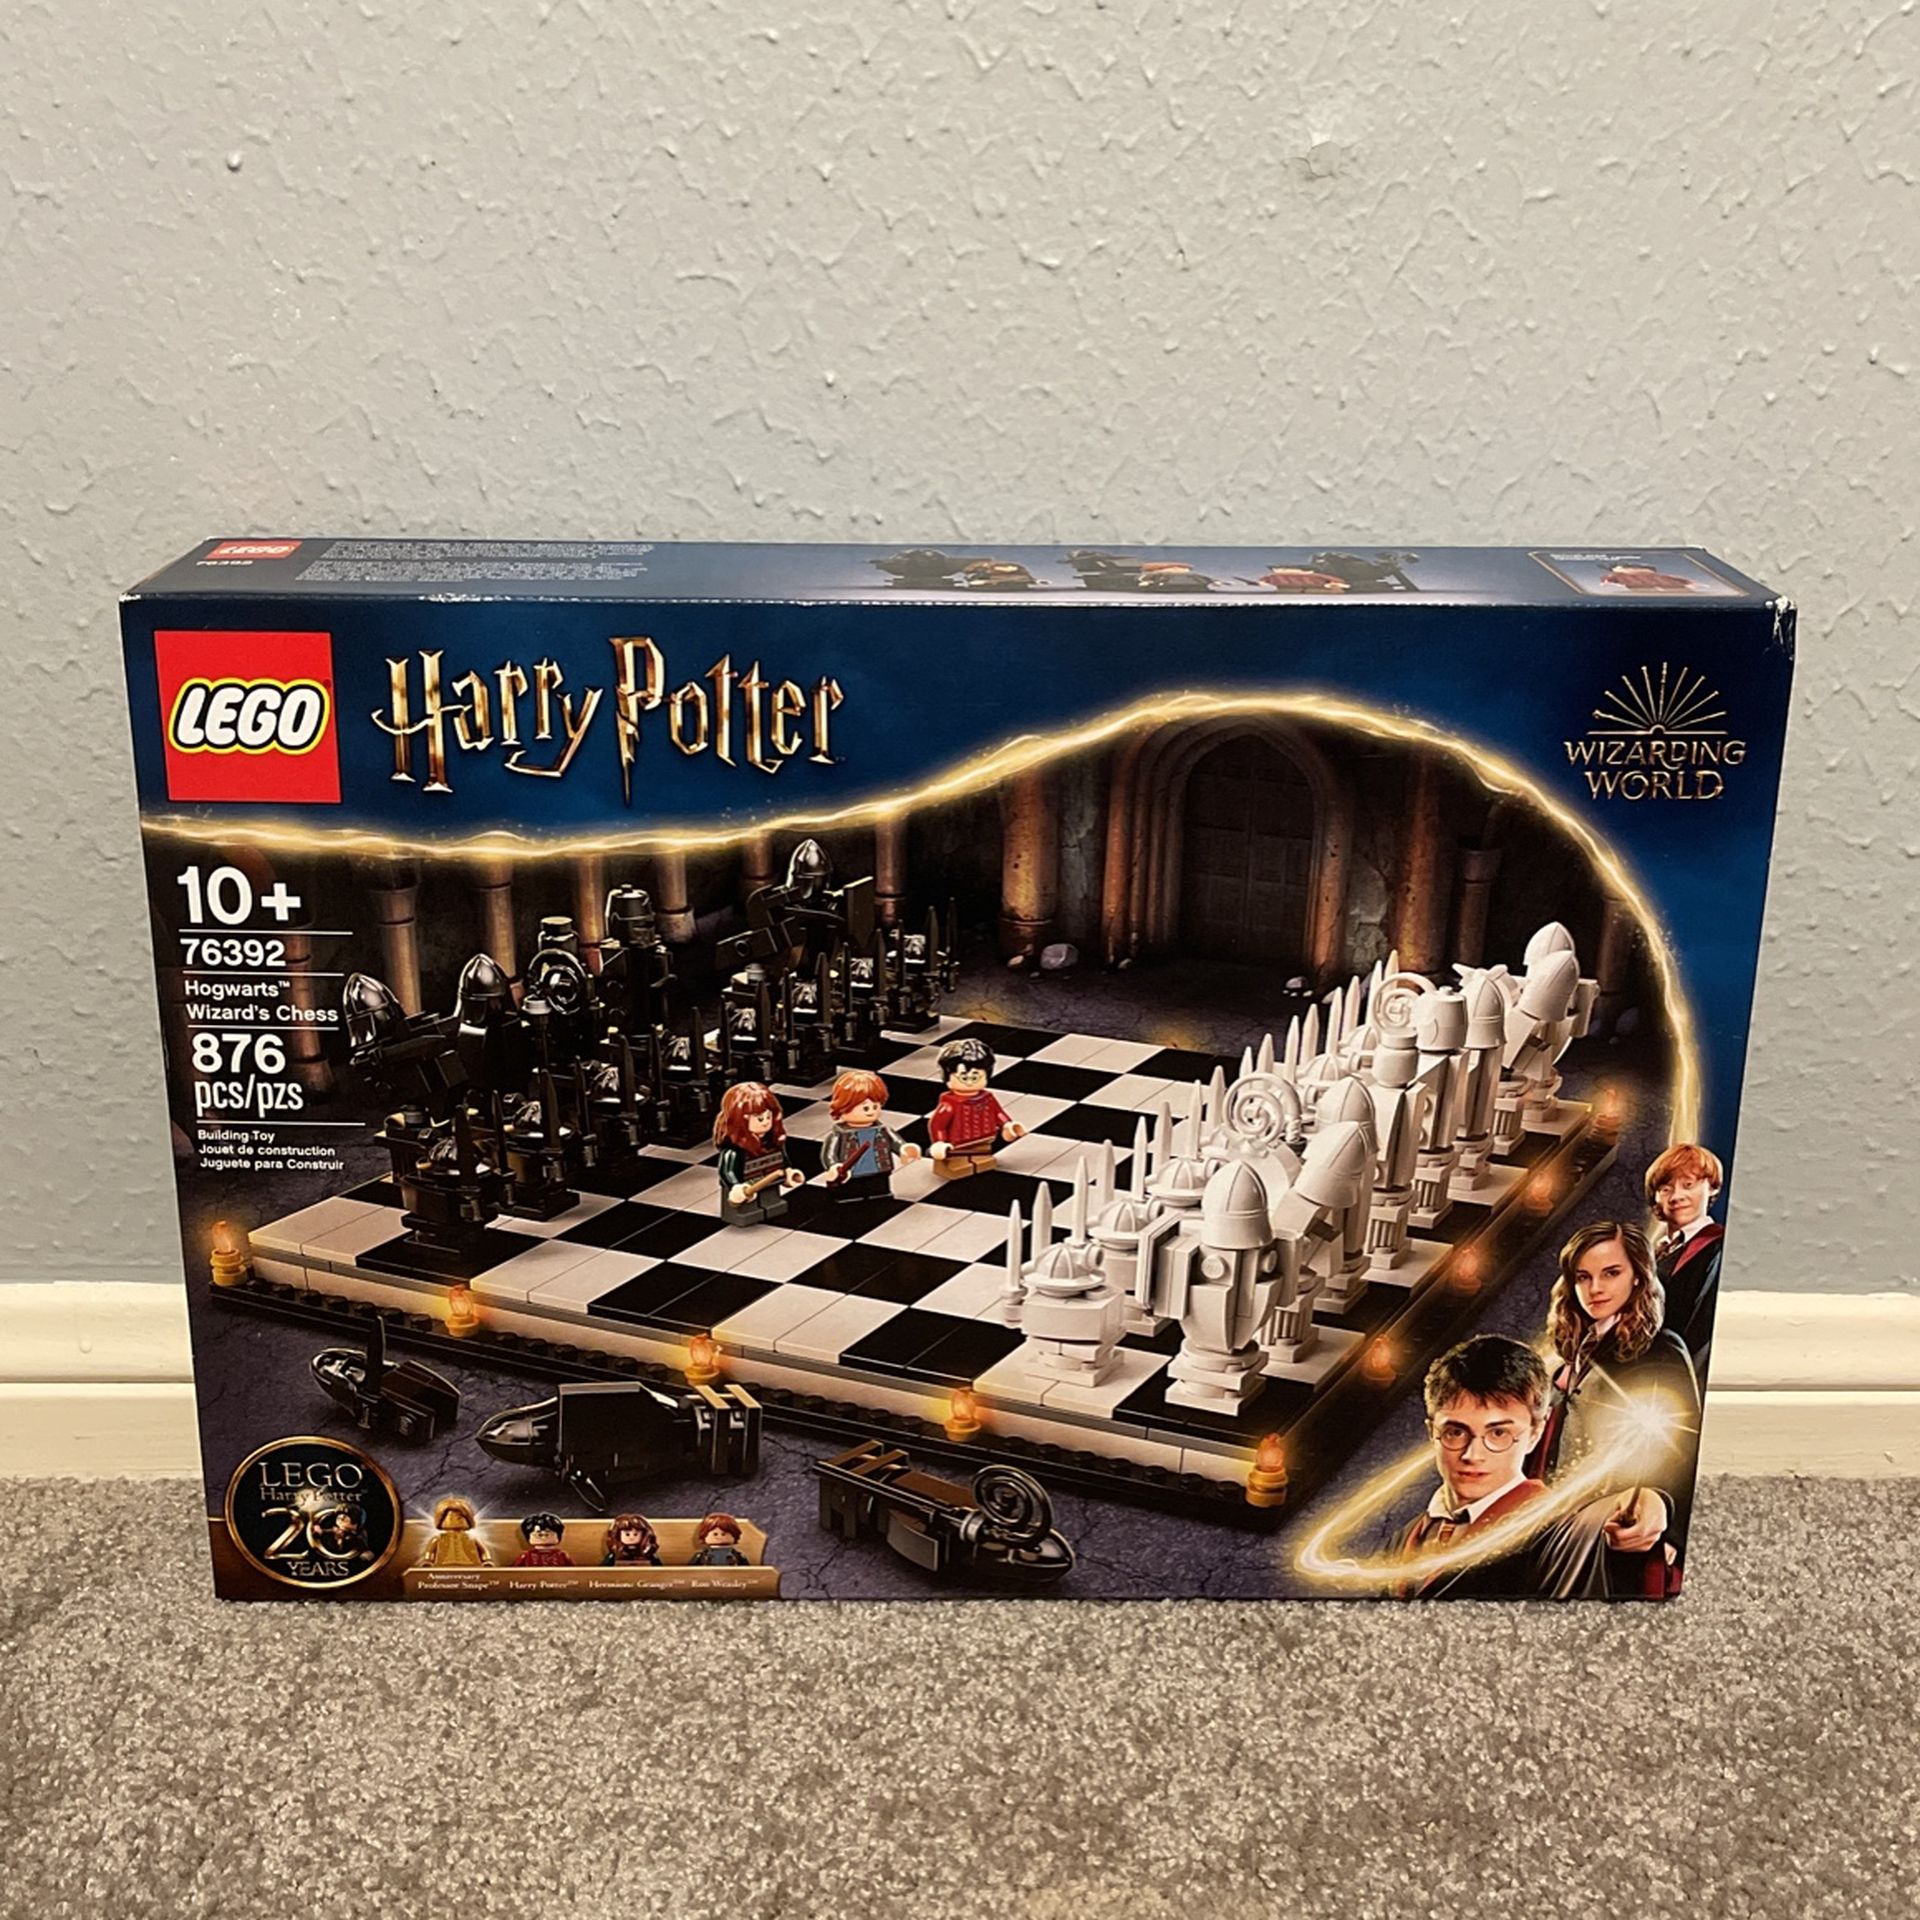 Harry Potter Lego Set # 76392